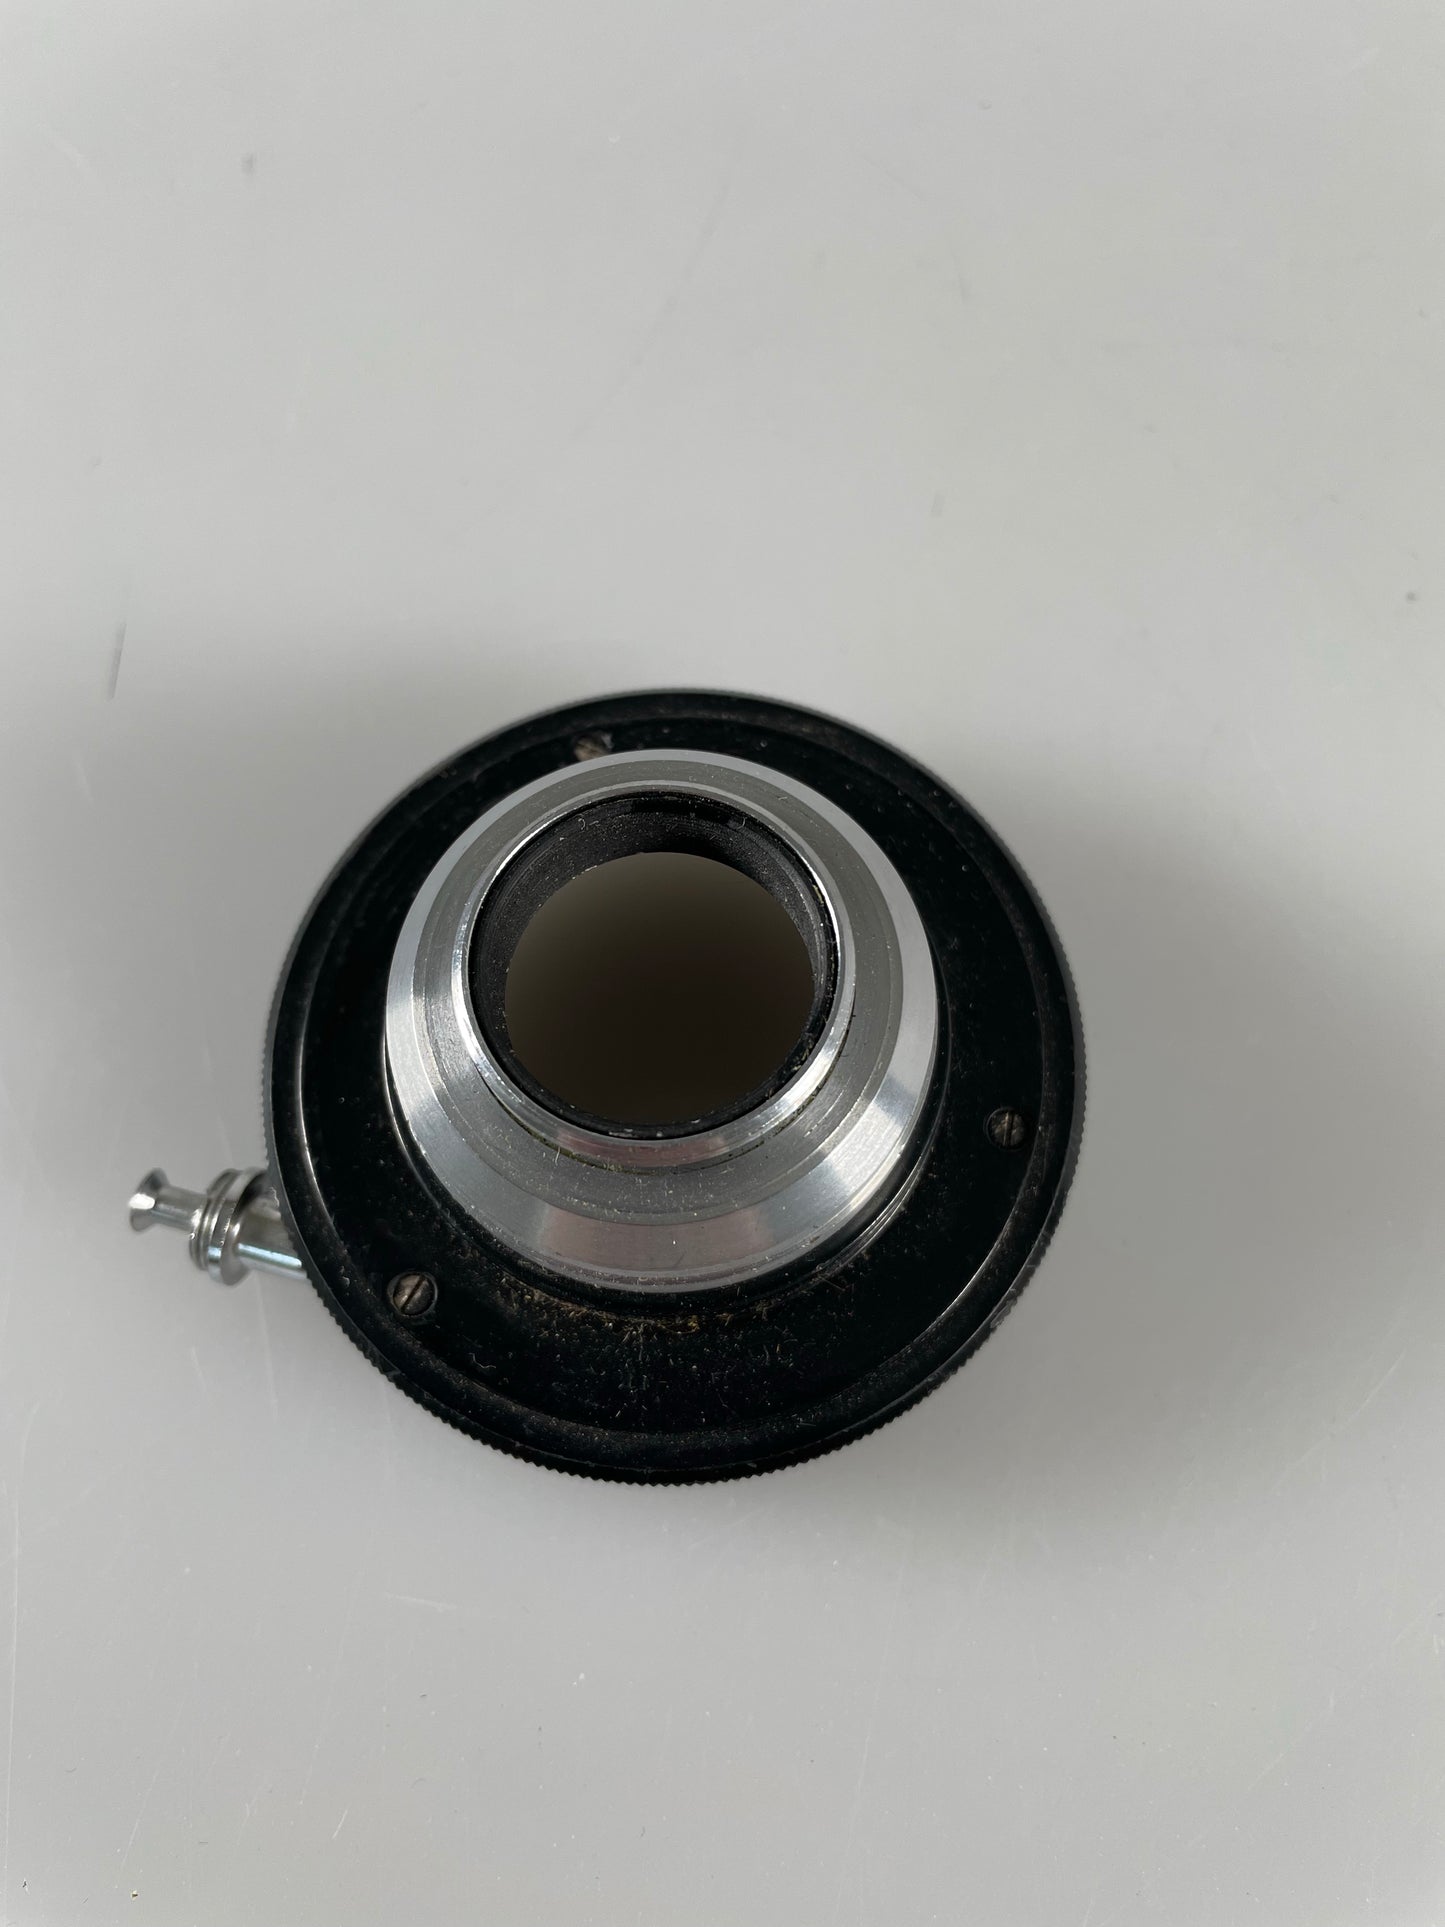 Nikon brand F to C lens mount adapter ring